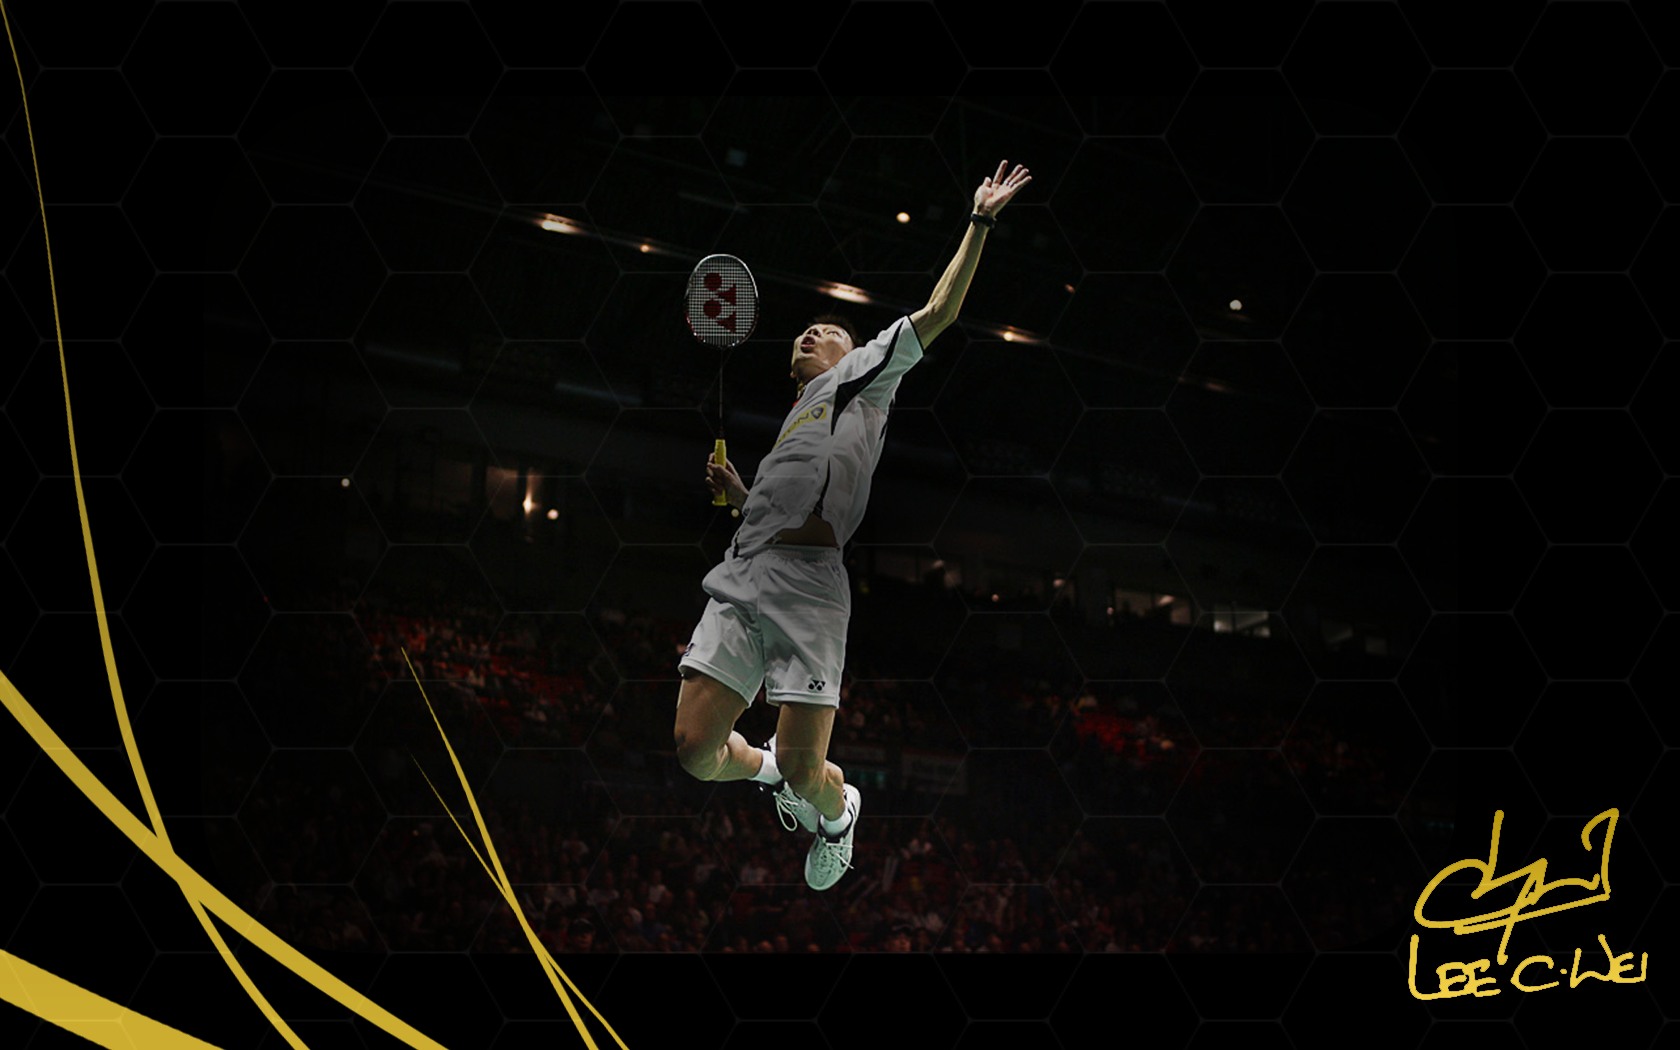 Badminton HD Wallpaper Background Image